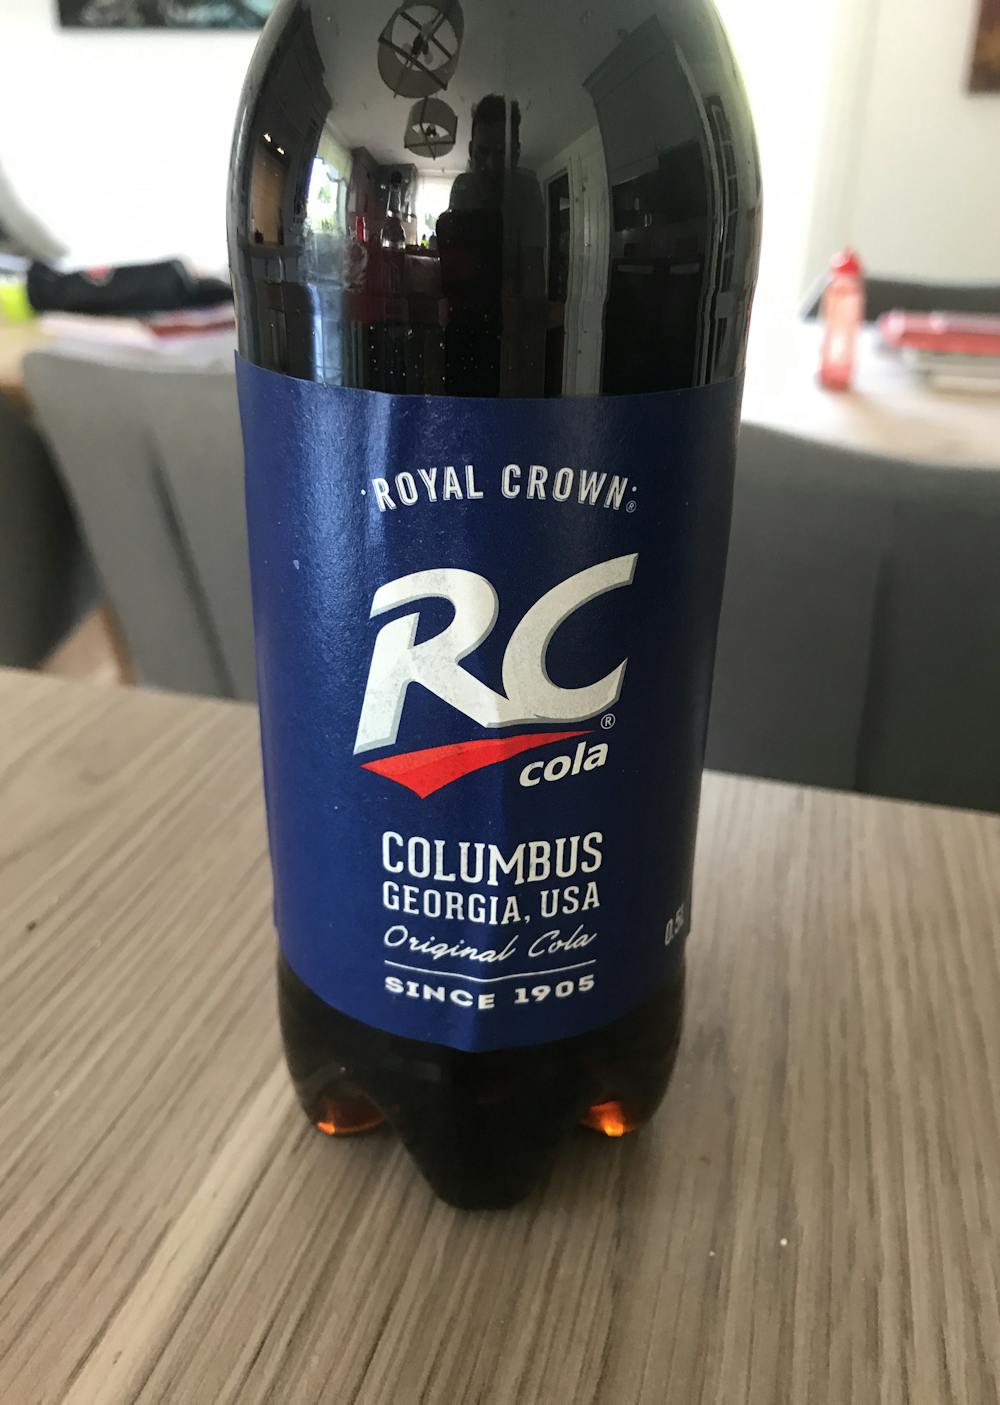 RC cola, Royal crown cola